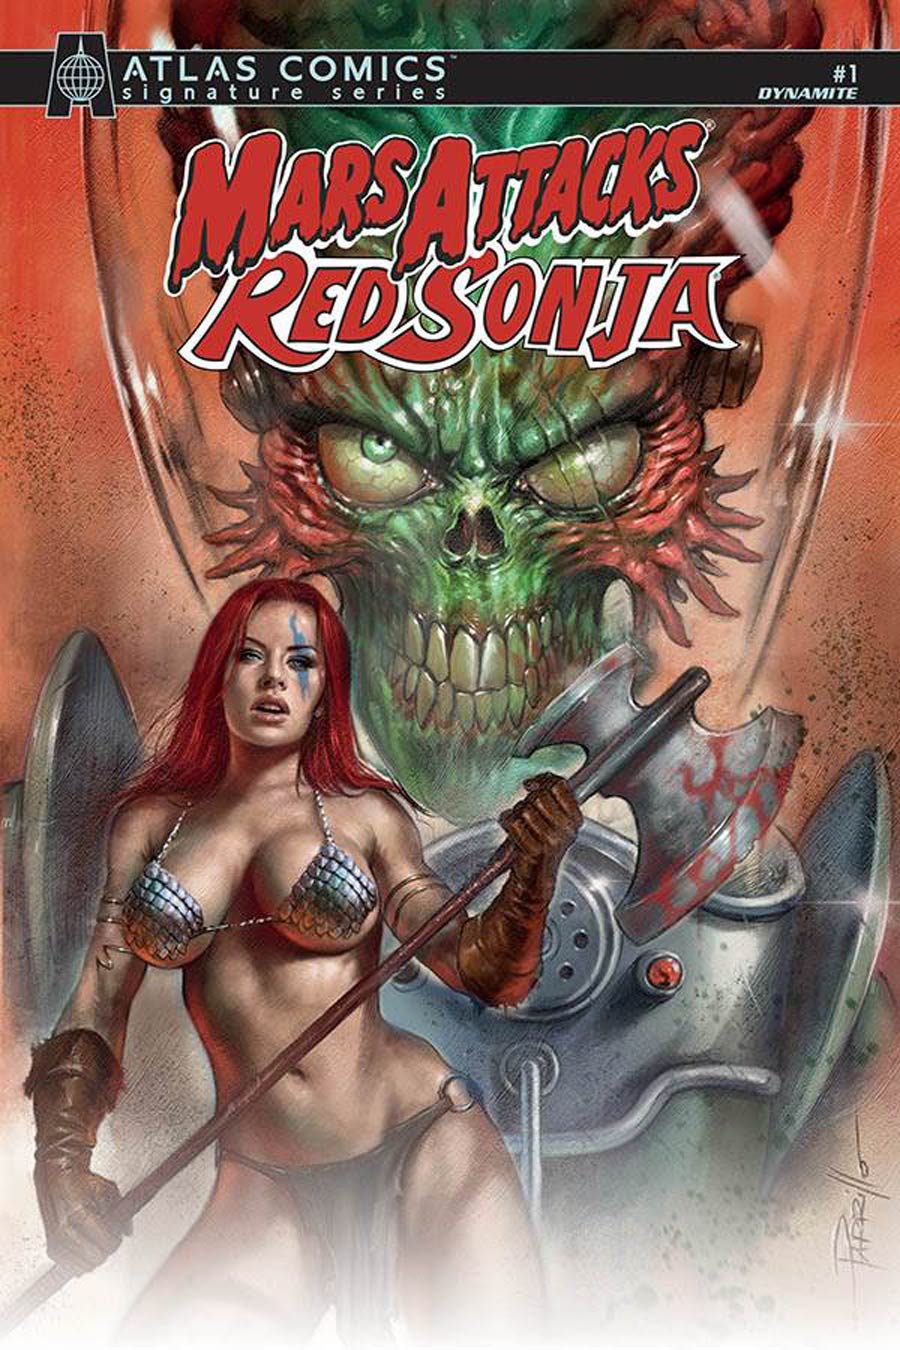 Mars Attacks Red Sonja #1 Cover S Atlas Comics Signature Series Signed By John Layman